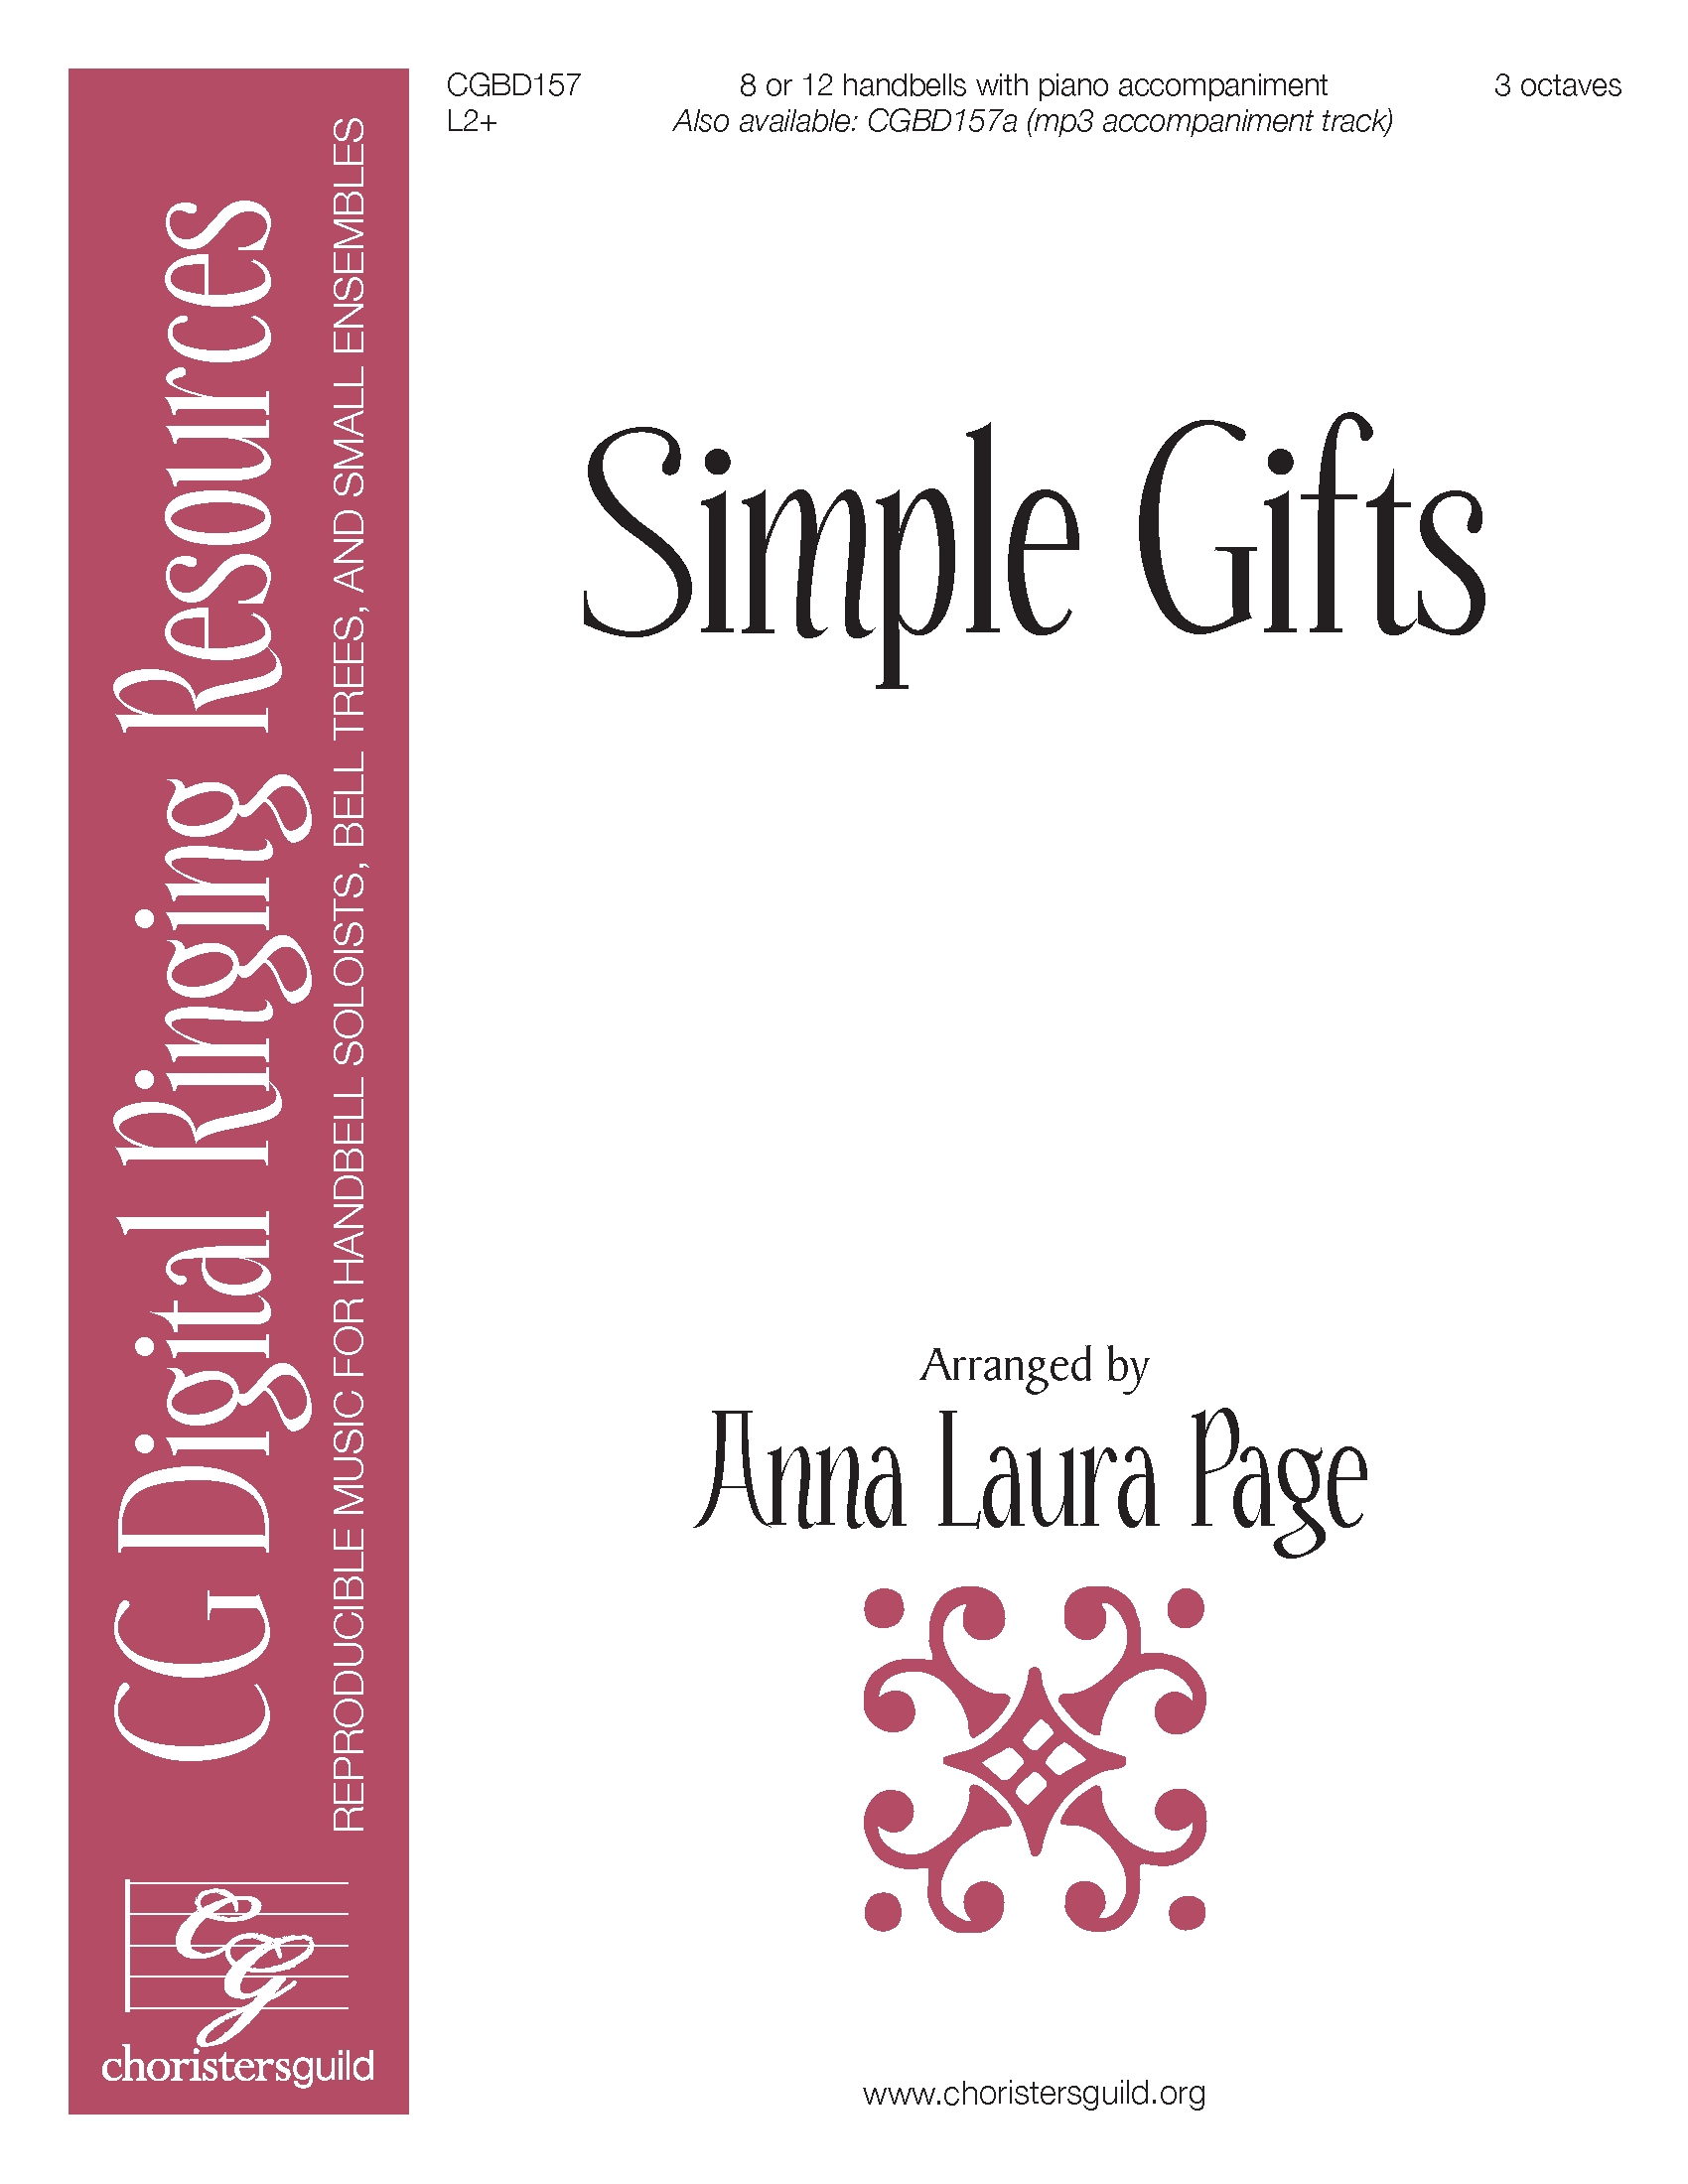 Simple Gifts - Digital Accompaniment Track